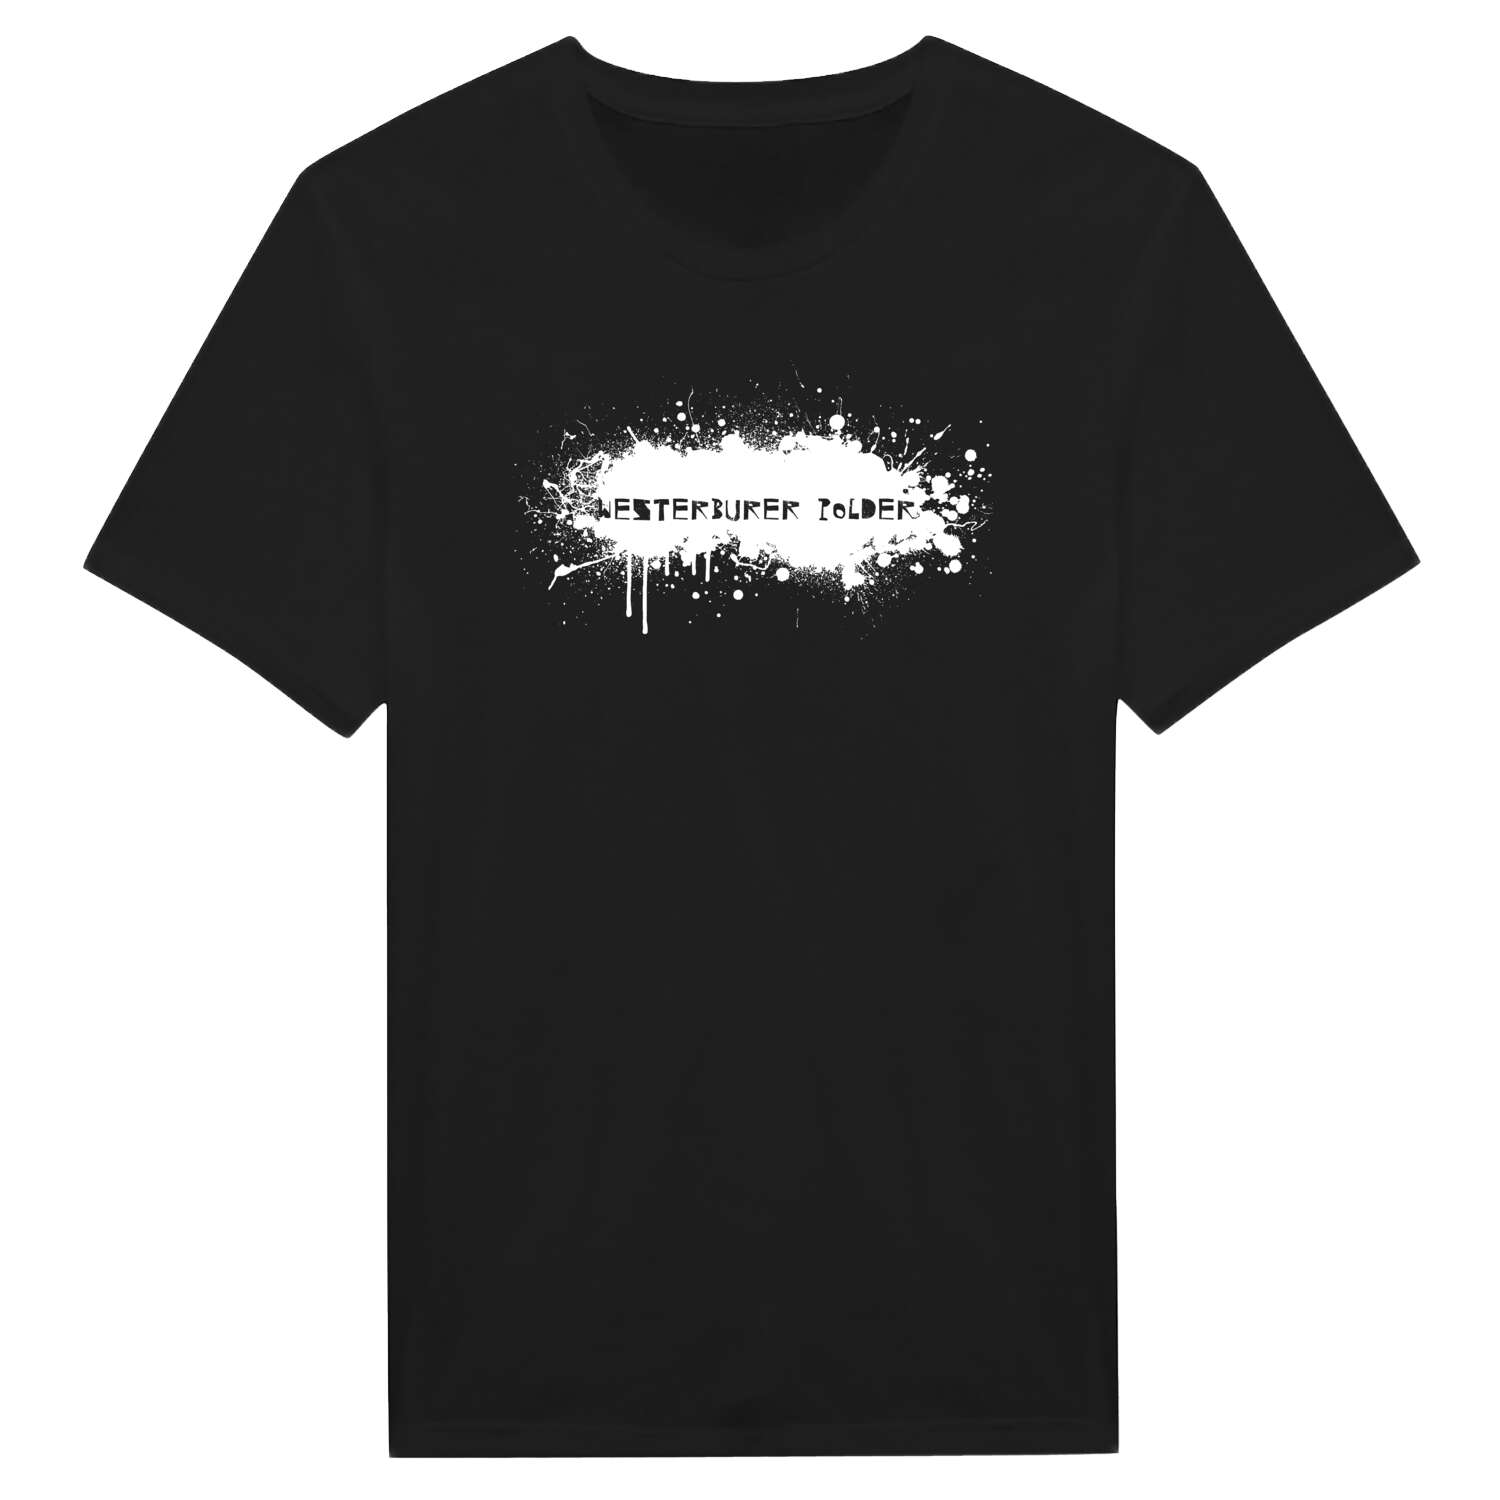 Westerburer Polder T-Shirt »Paint Splash Punk«